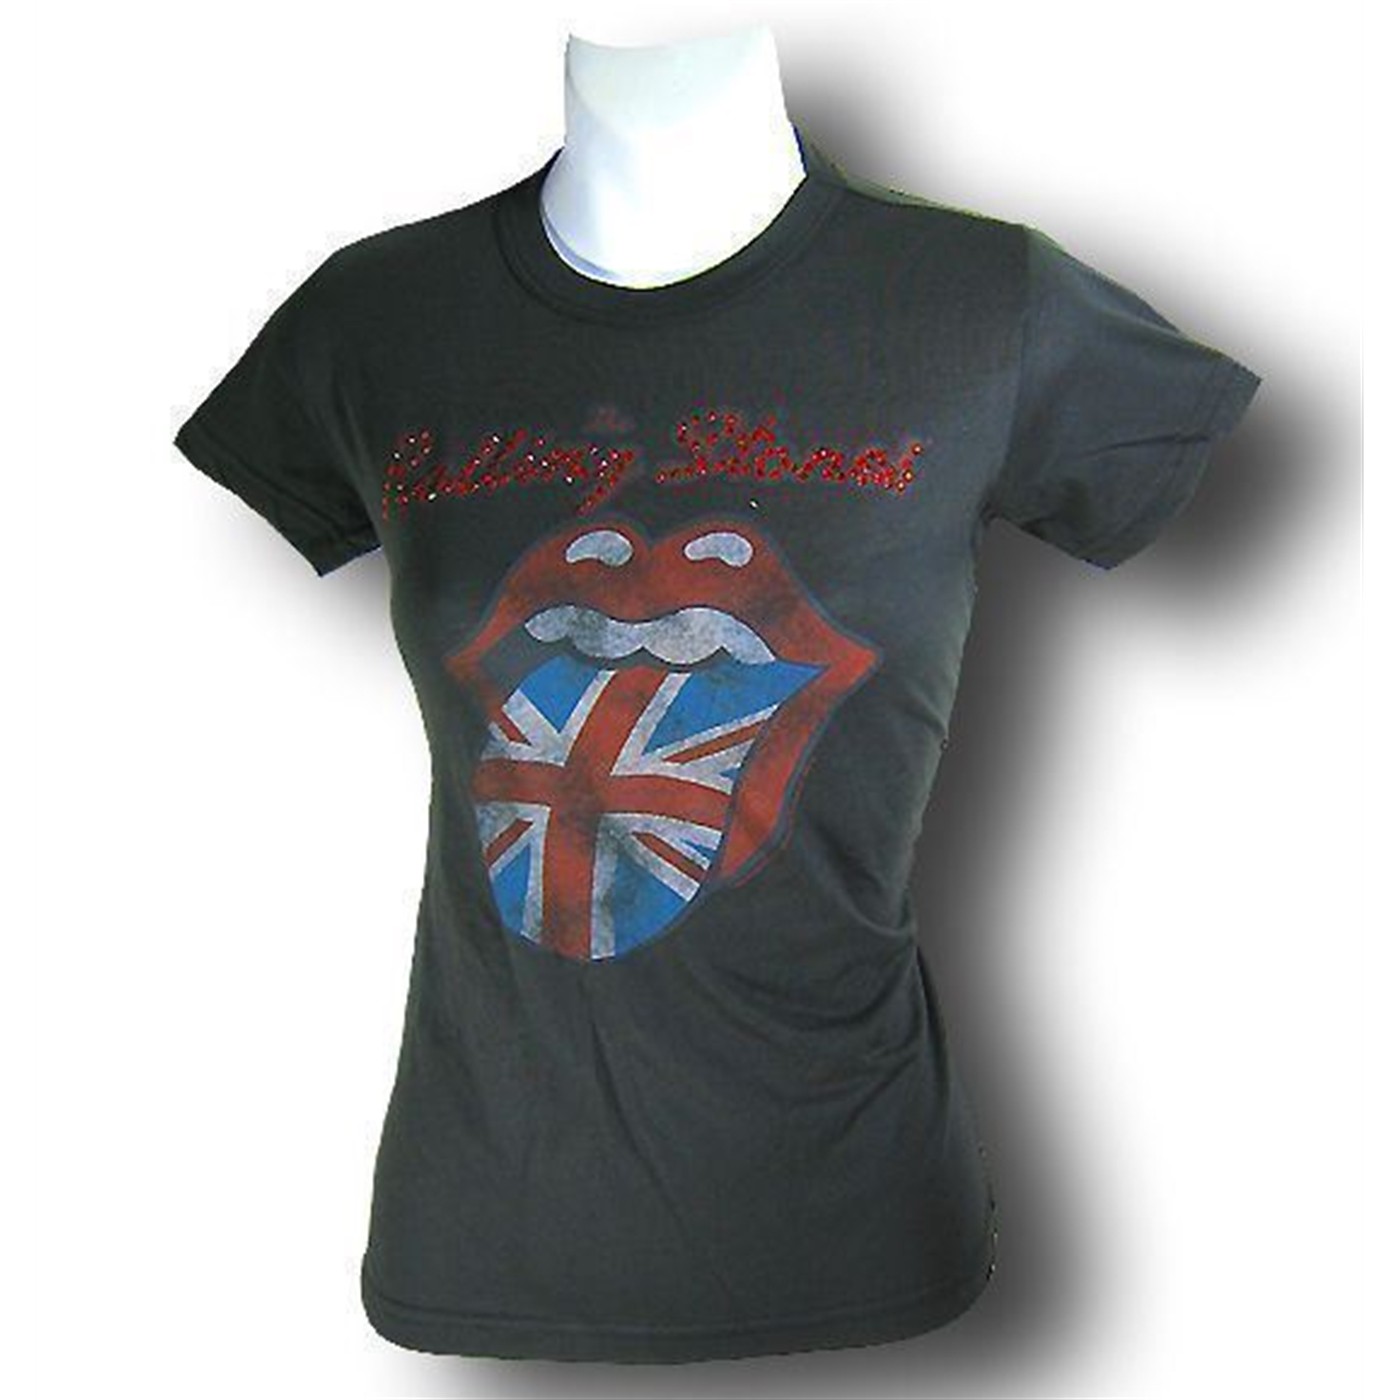 Rolling Stones Juniors Jeweled Concert T-Shirt